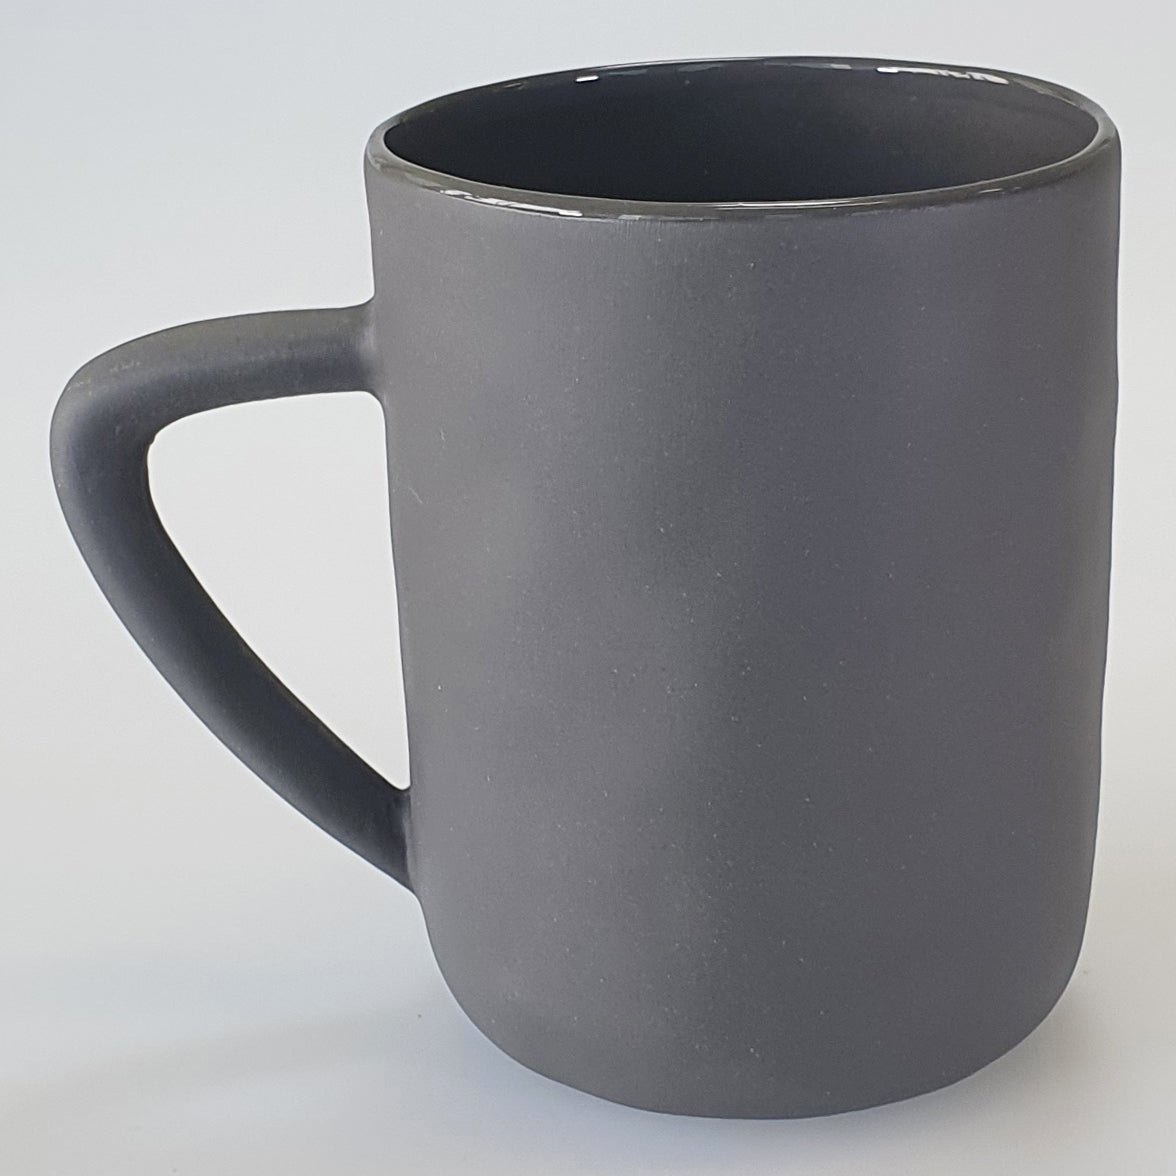 Flax Mug - Charcoal